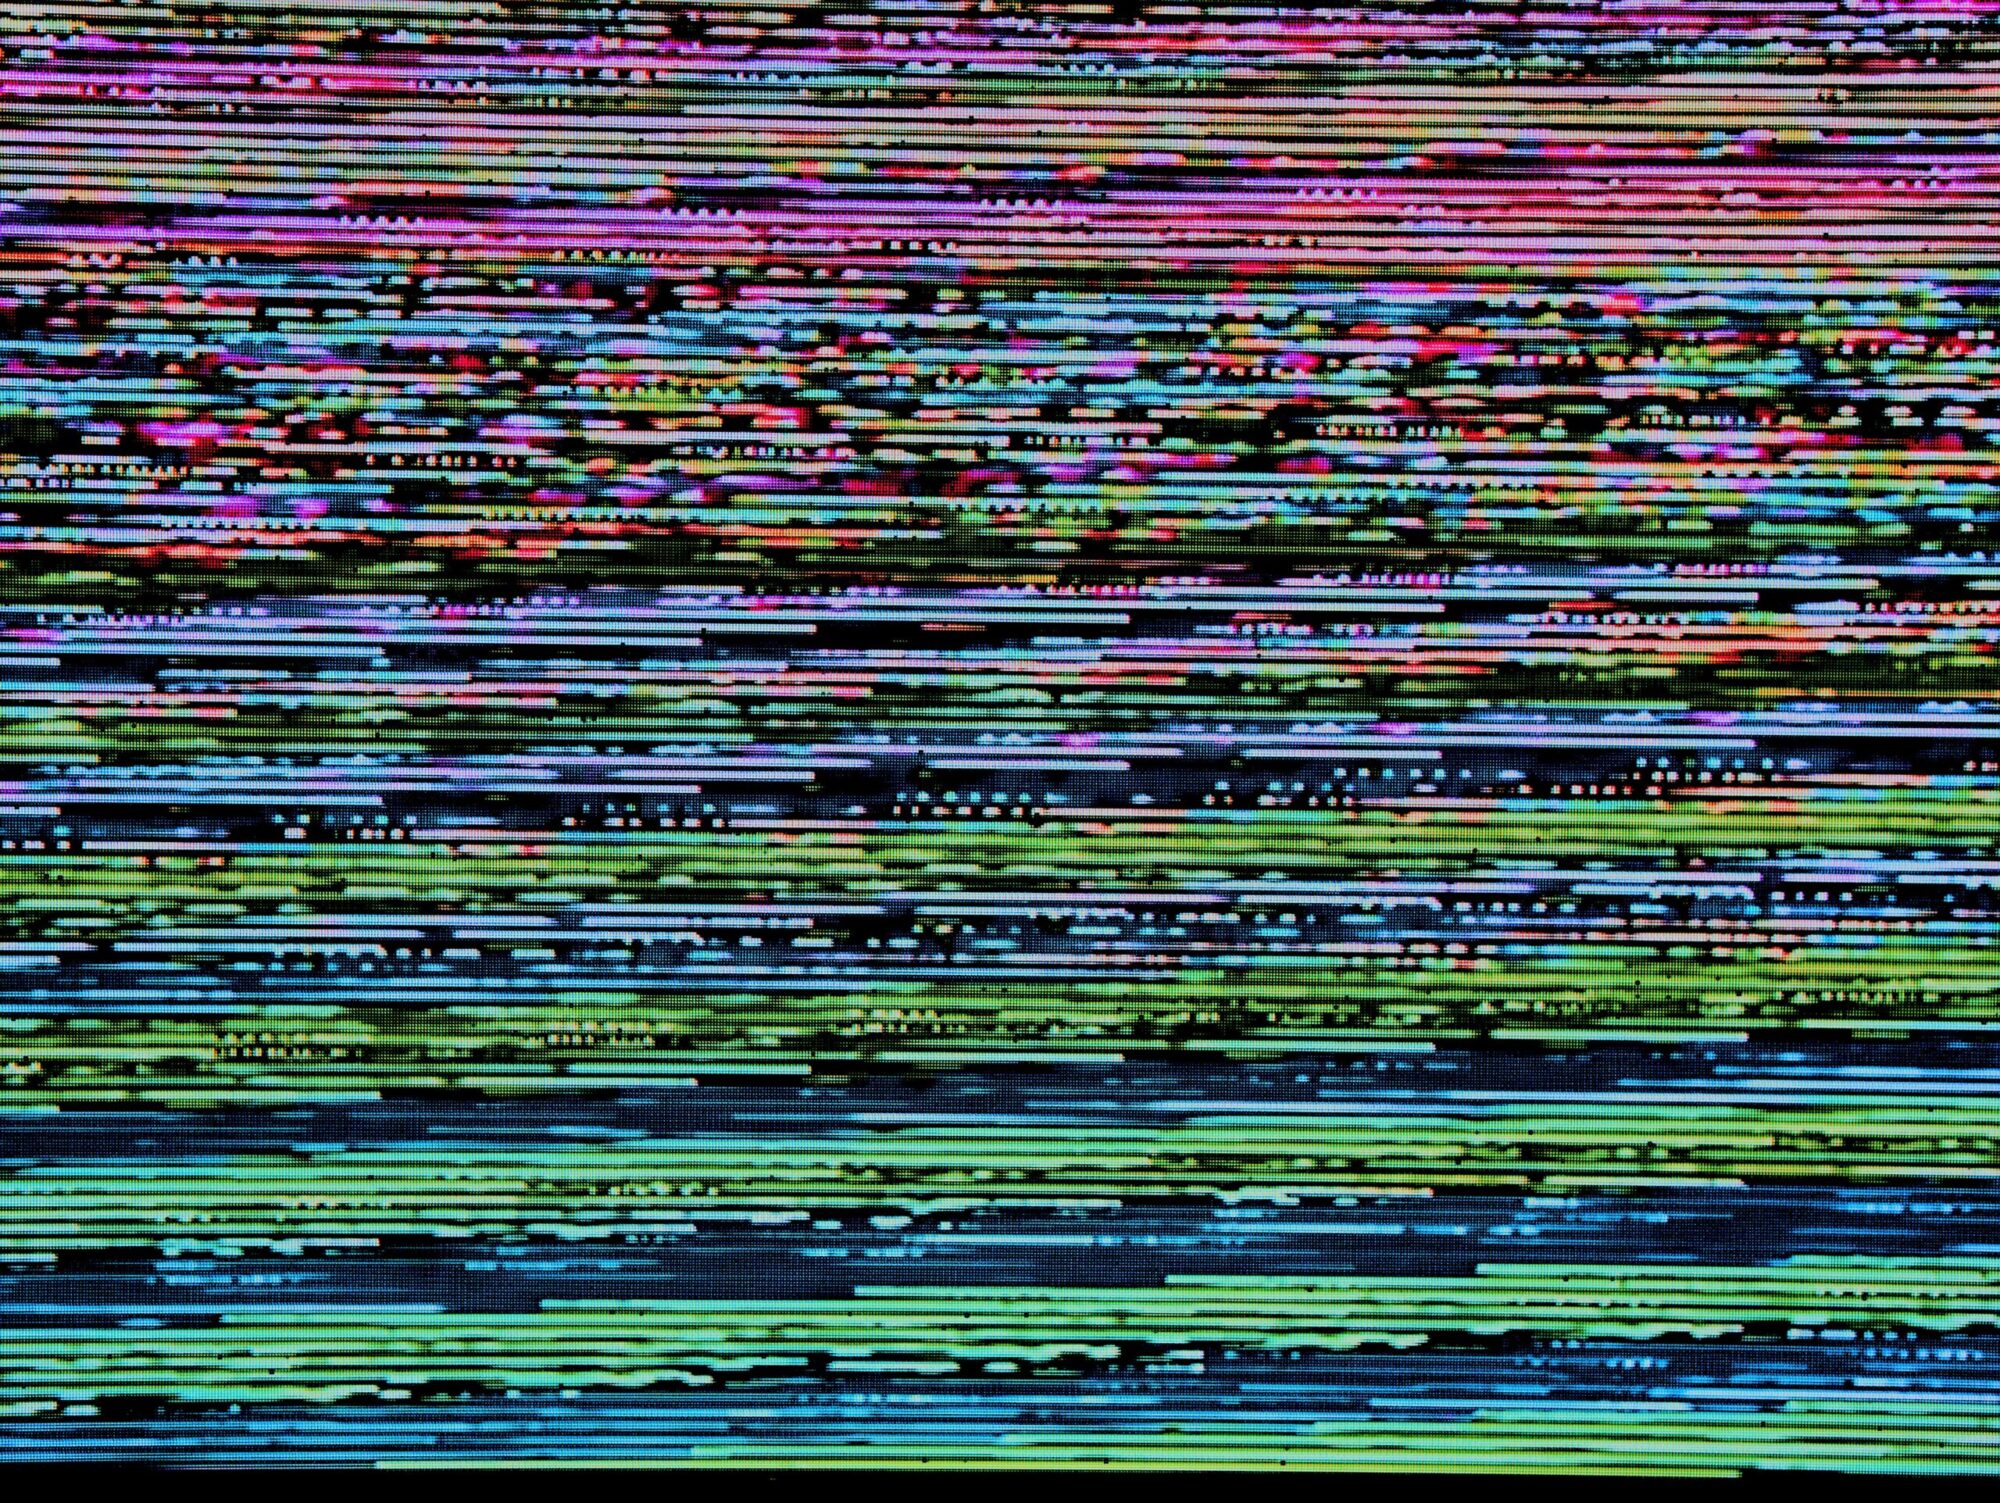 Background image of TV static